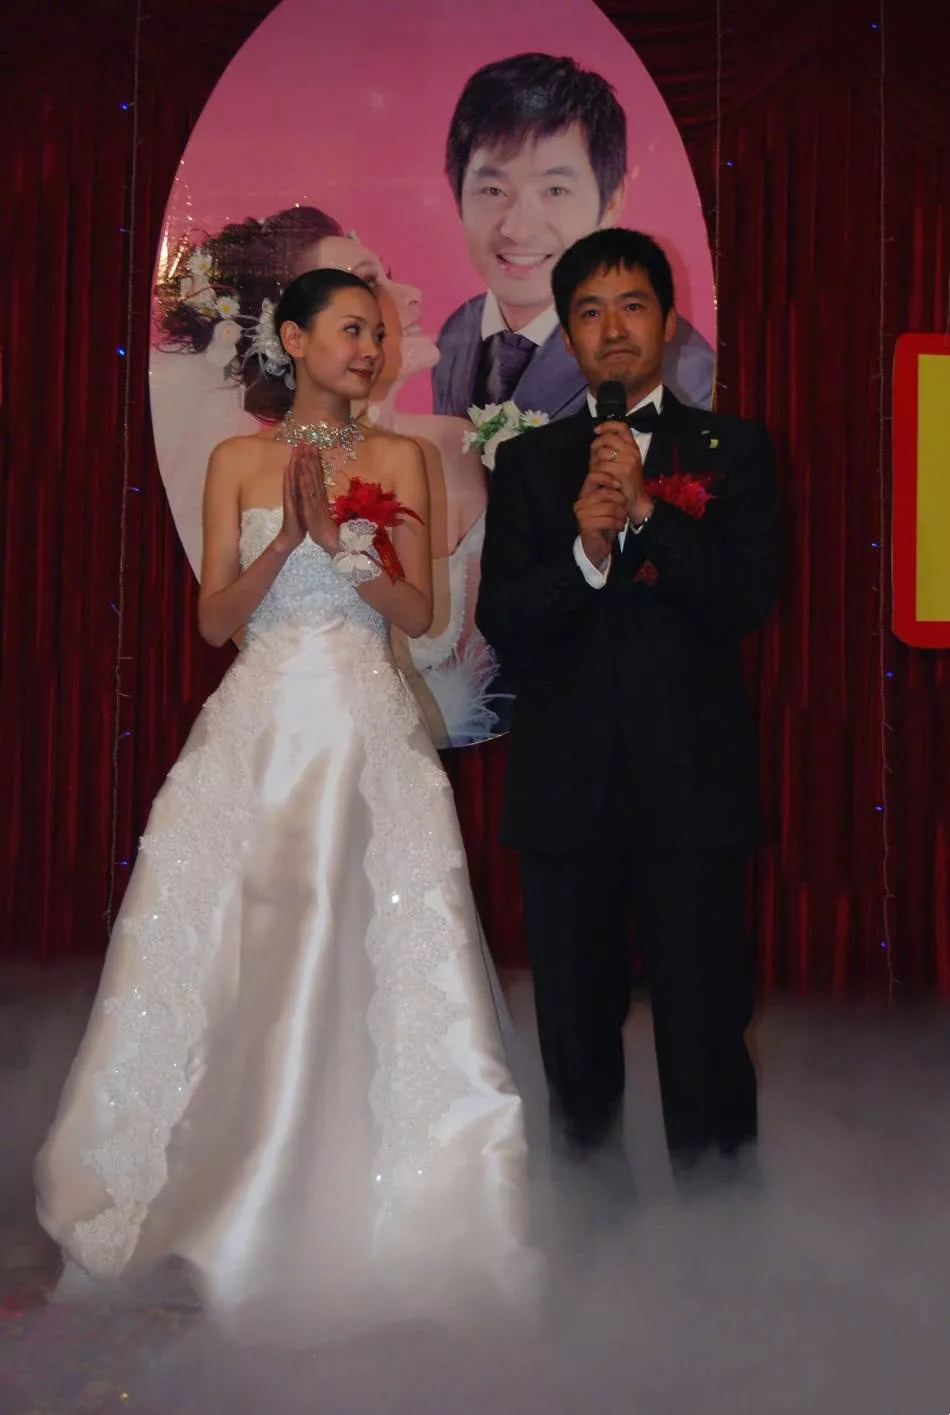 程莉莎和郭晓东婚礼图片